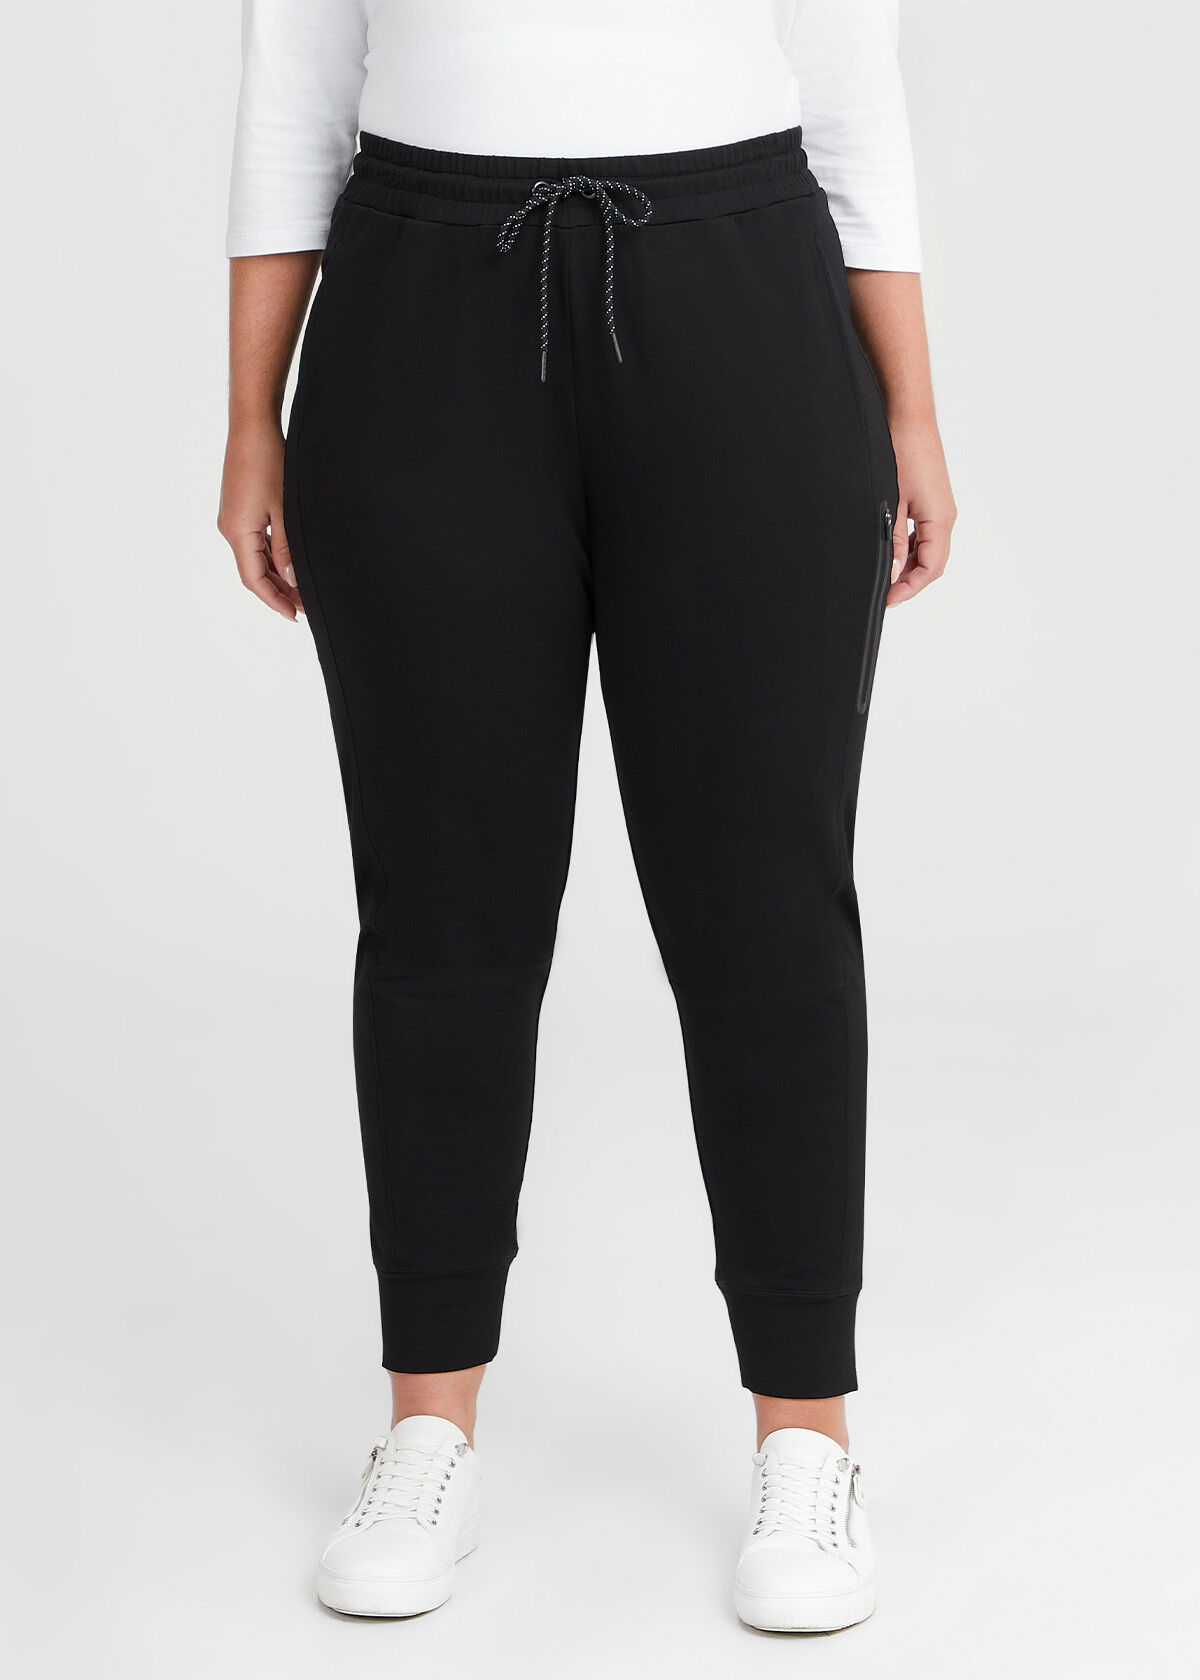 Buy Online Plus Size Black Track Pants at best price - Pluss.in